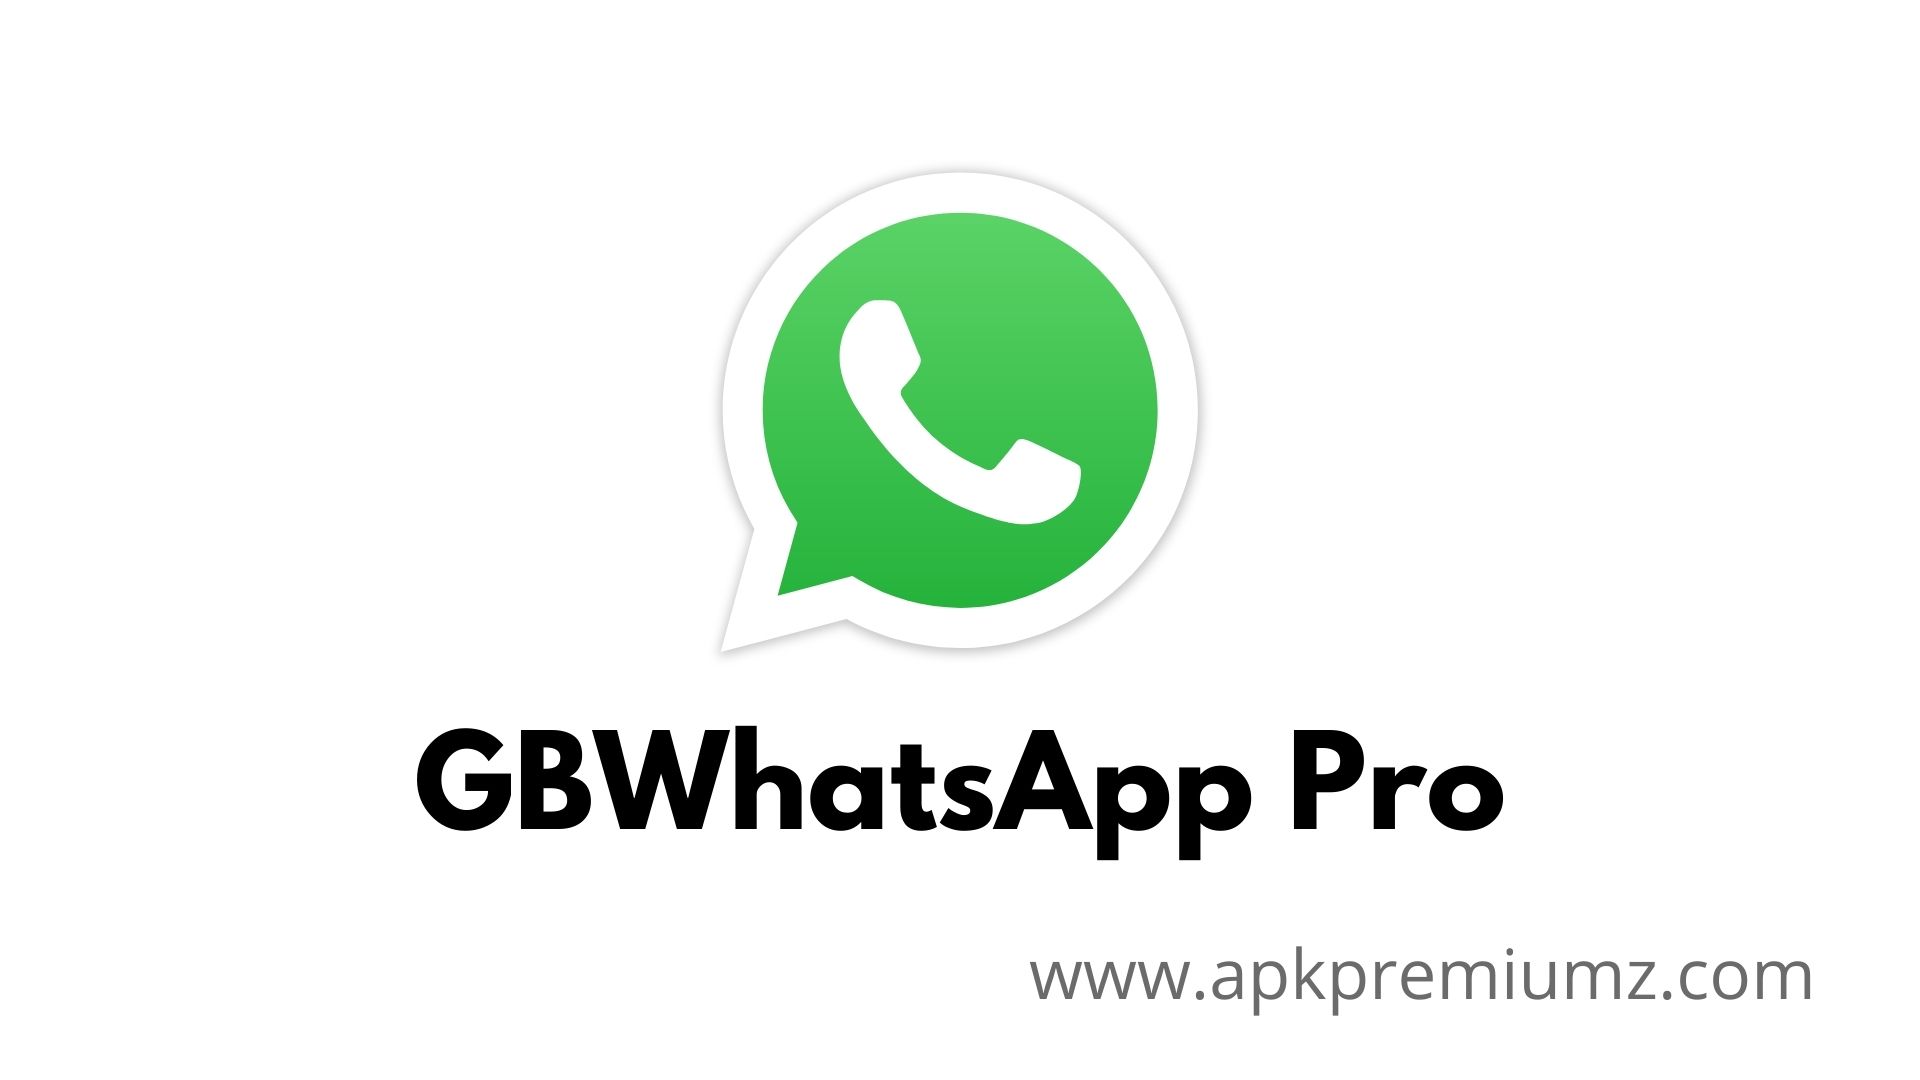 gbwhatsapp pro 13.50 download